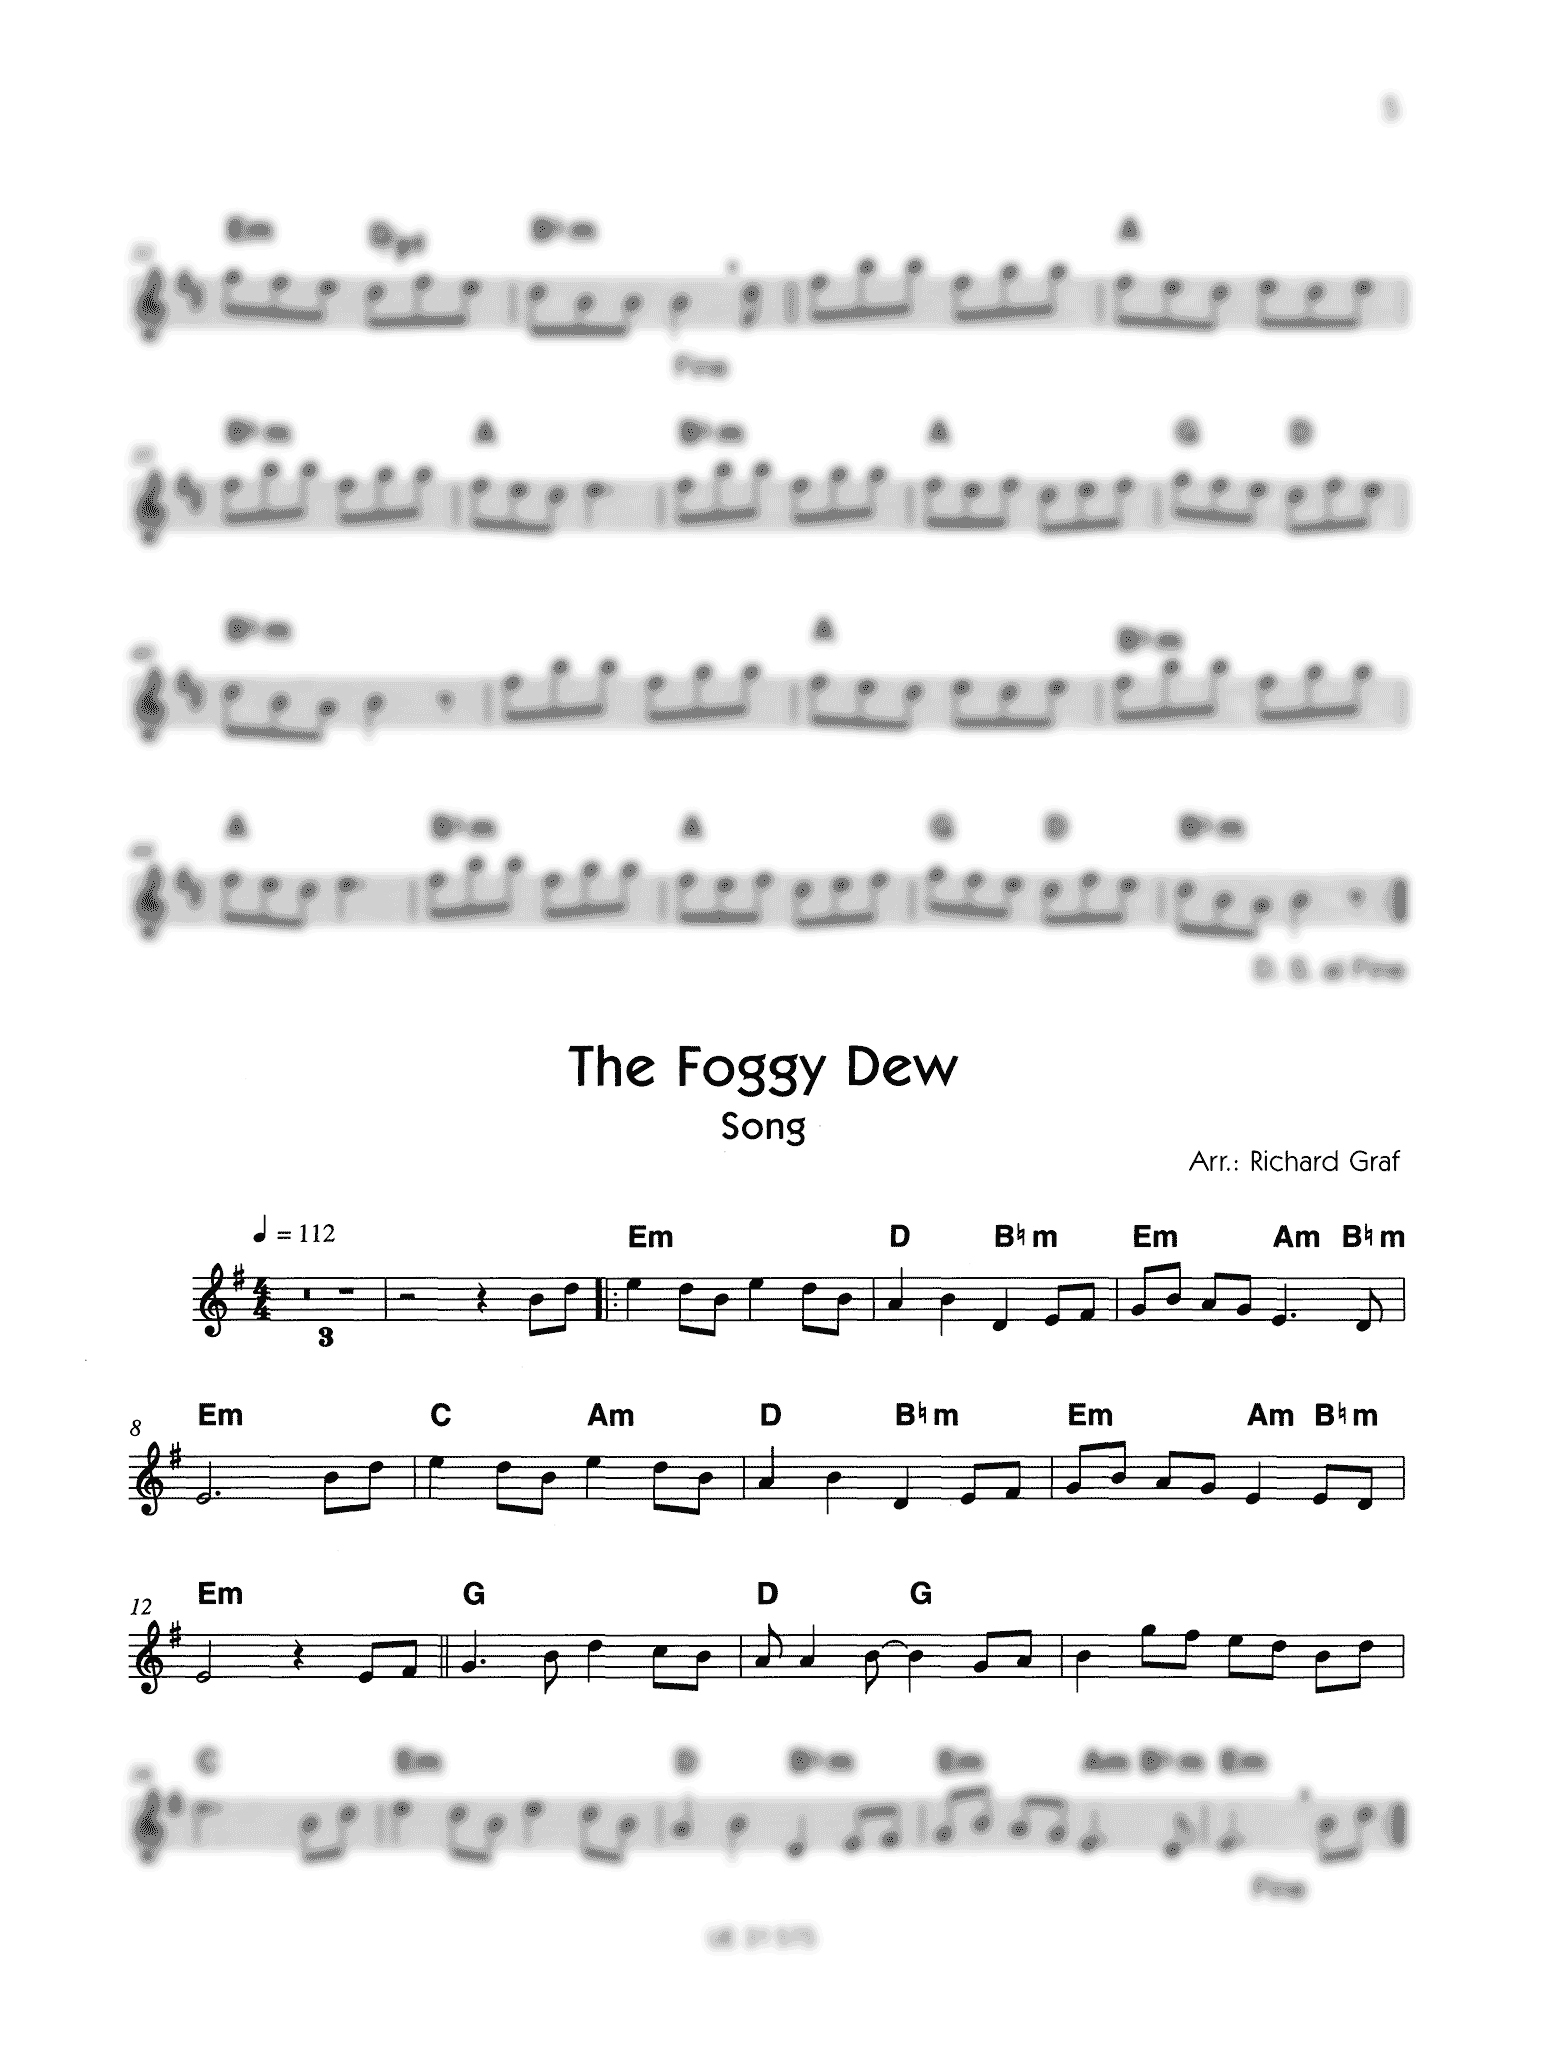 The Foggy Dew accompaniment